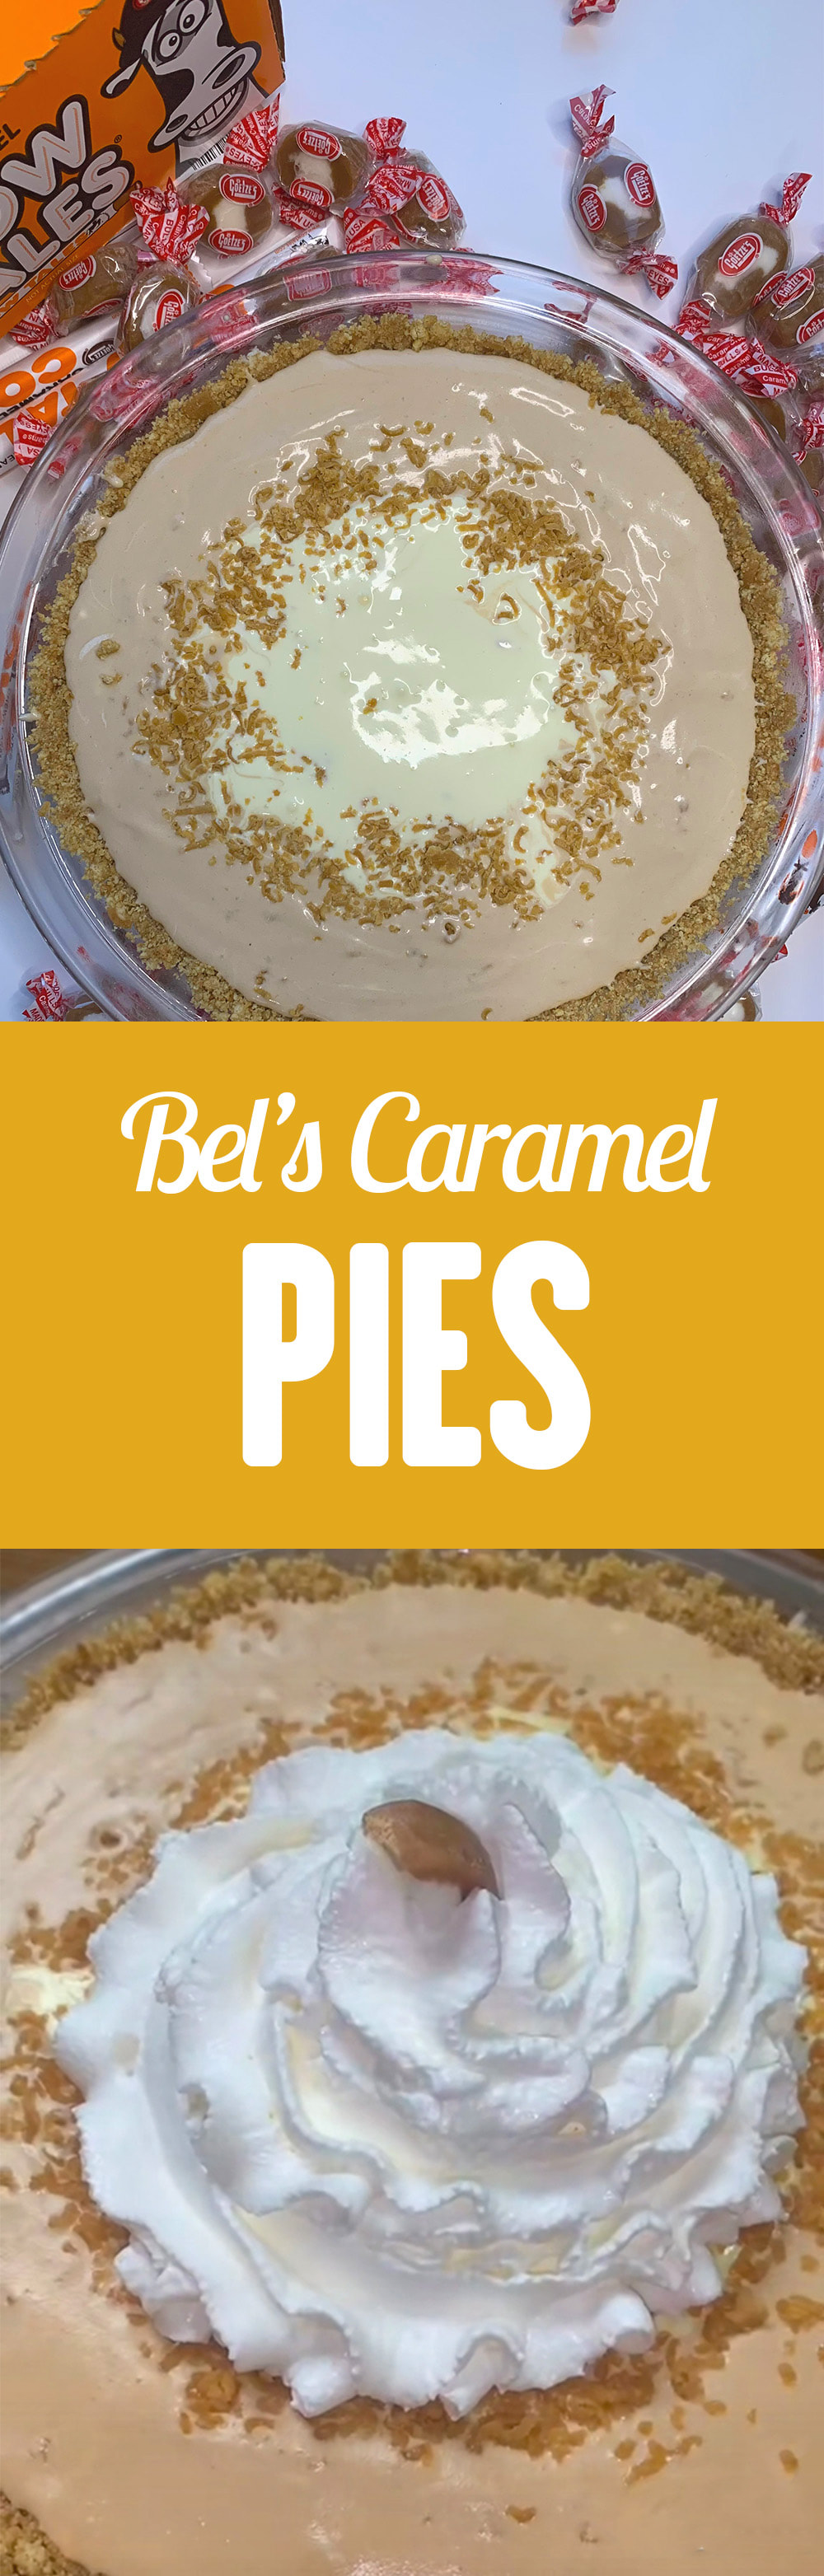 Bel's Caramel Pies Pinterest